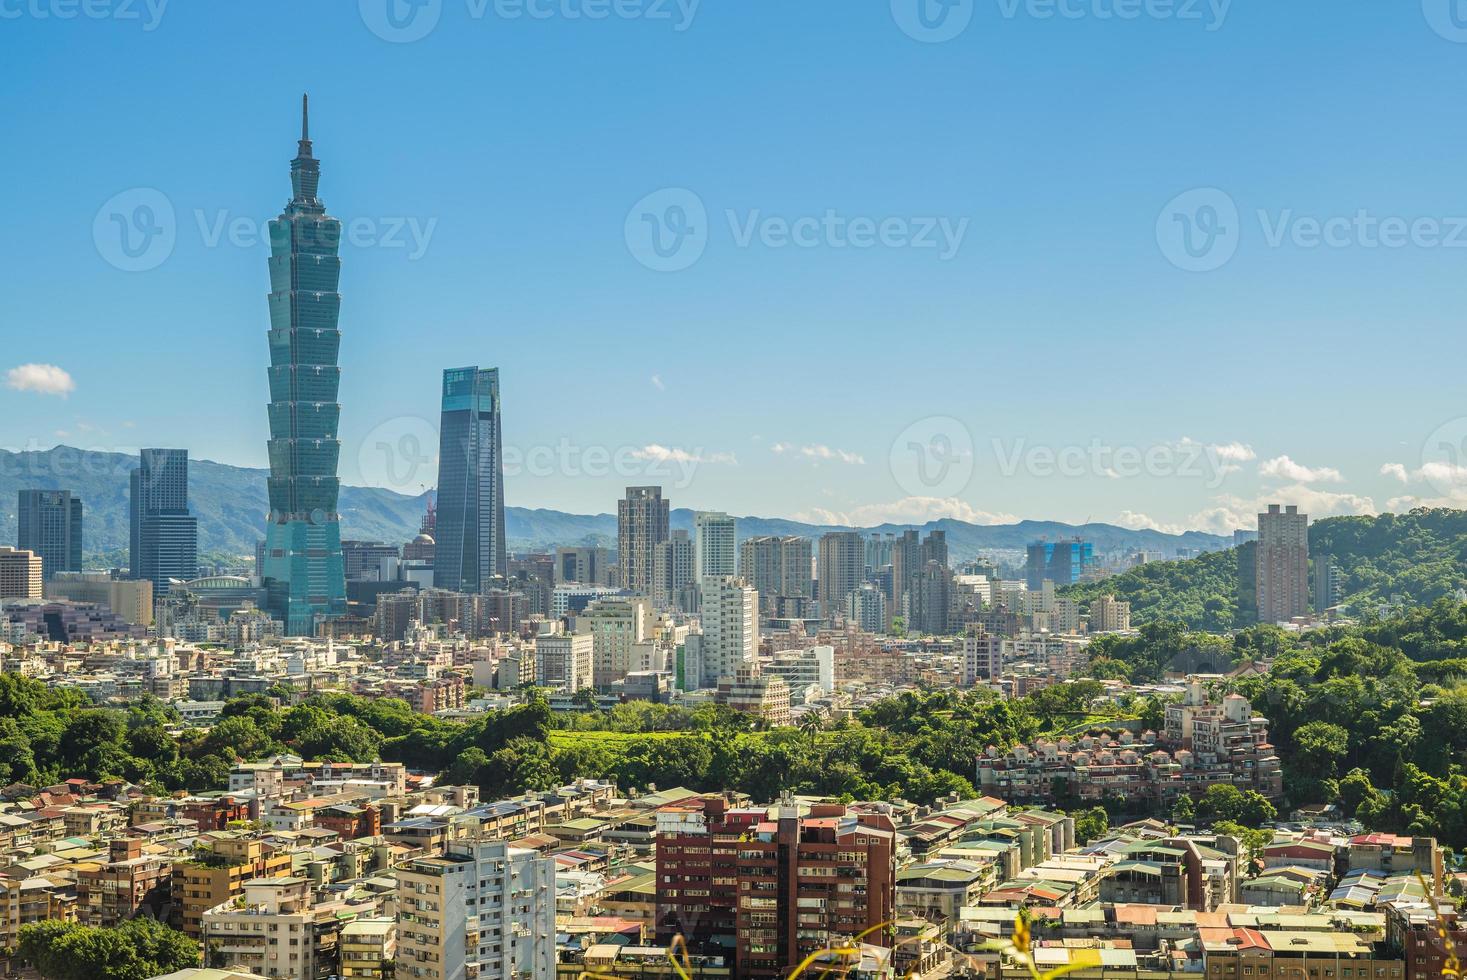 Panoramablick auf die Stadt Taipeh in Taiwan foto